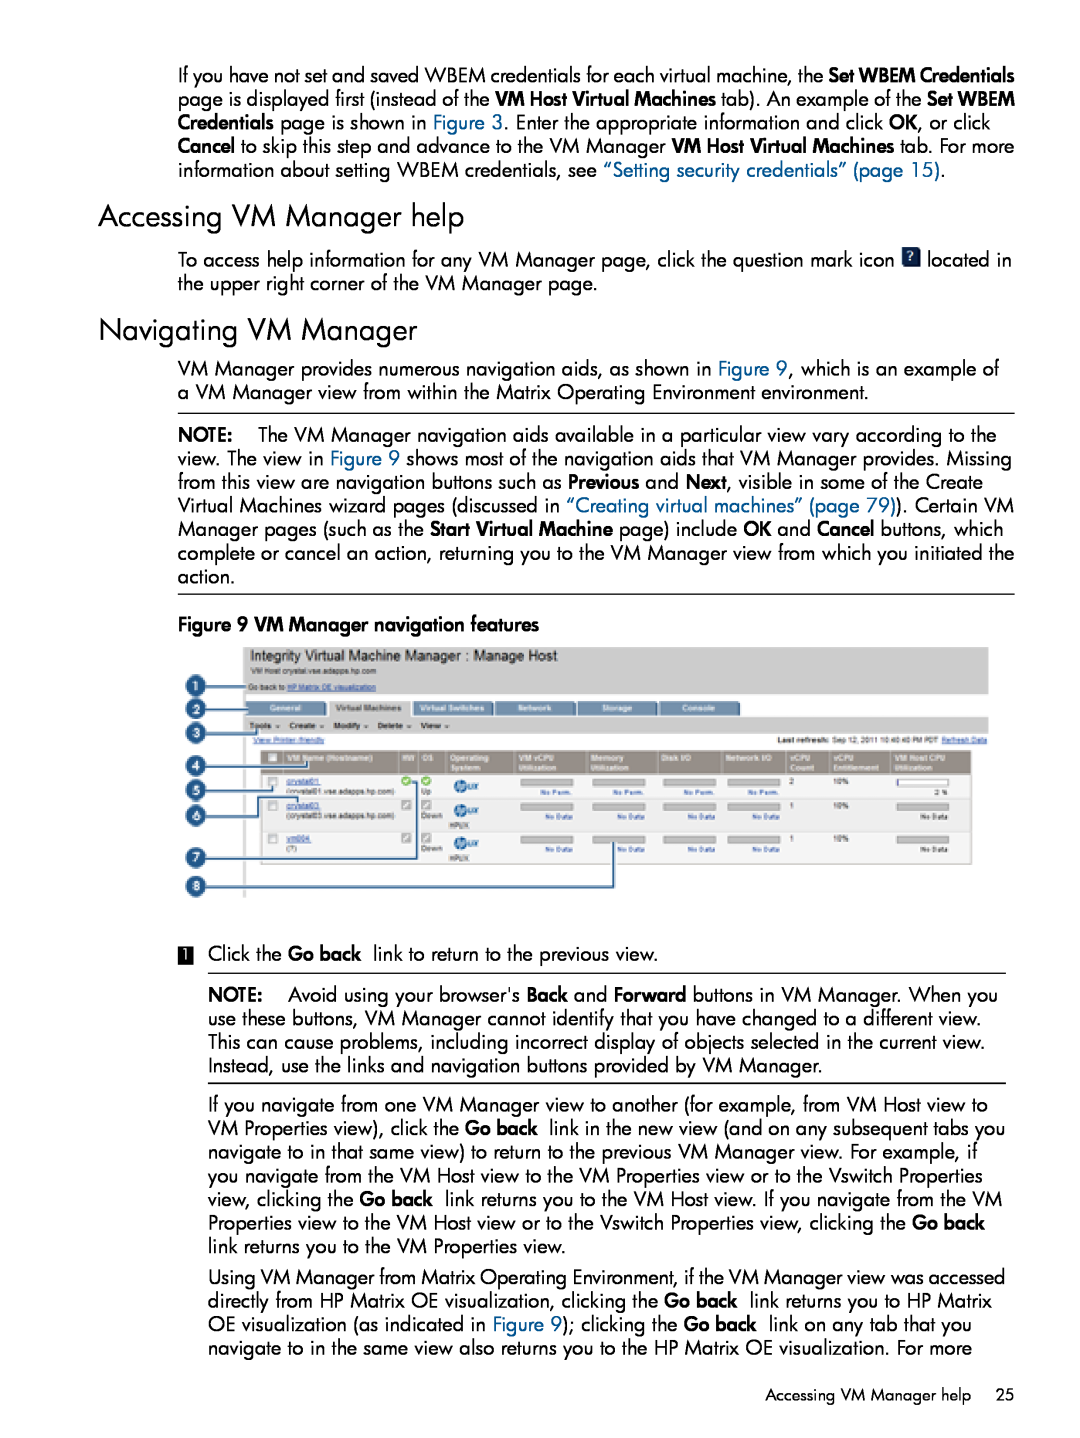 HP UX vPars and Integrity VM v6 manual Accessing VM Manager help, Navigating VM Manager 